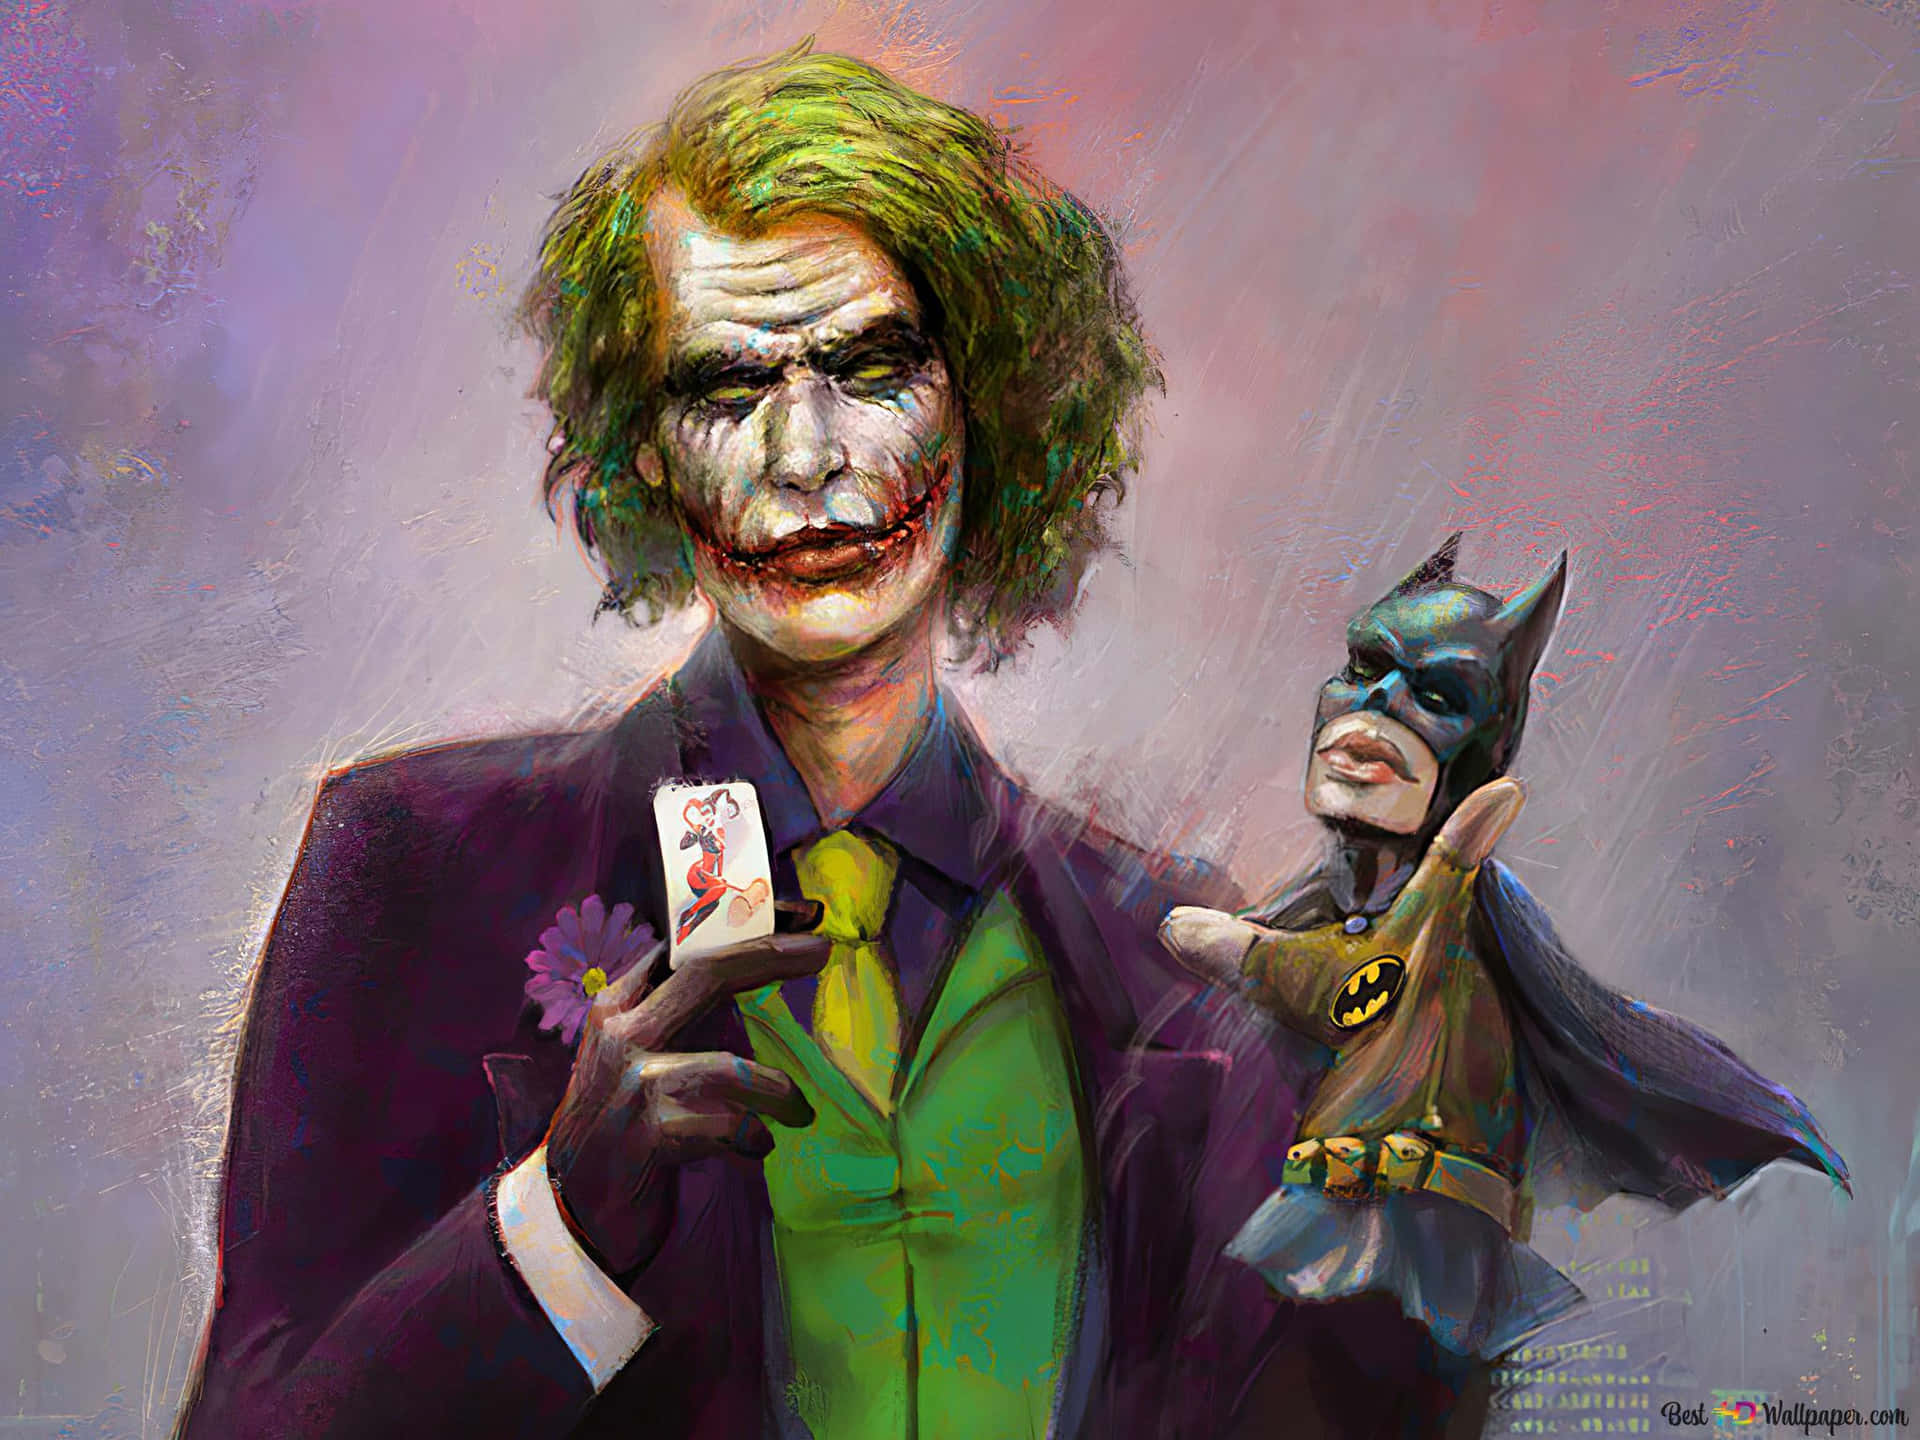 Enter the chaos! Your favorite villain from DC Comics - the Joker! Wallpaper